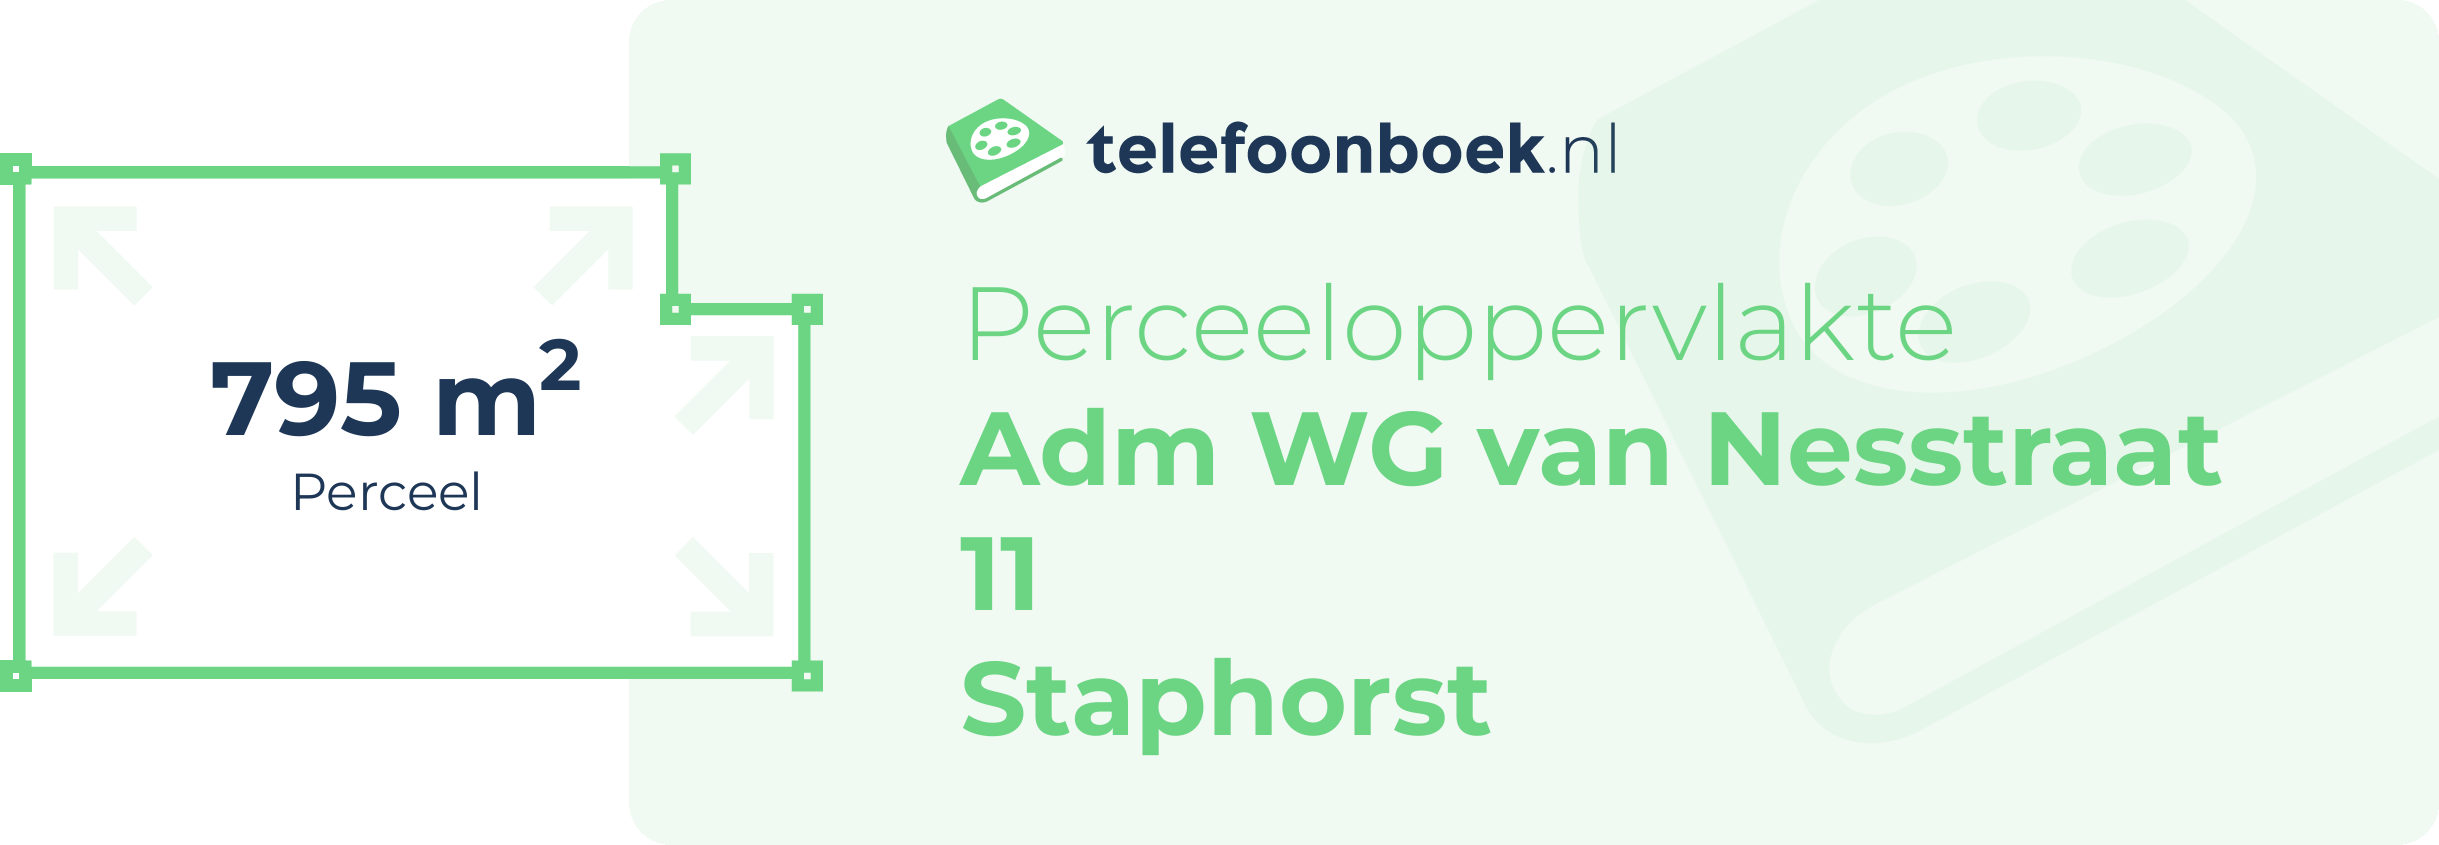 Perceeloppervlakte Adm WG Van Nesstraat 11 Staphorst